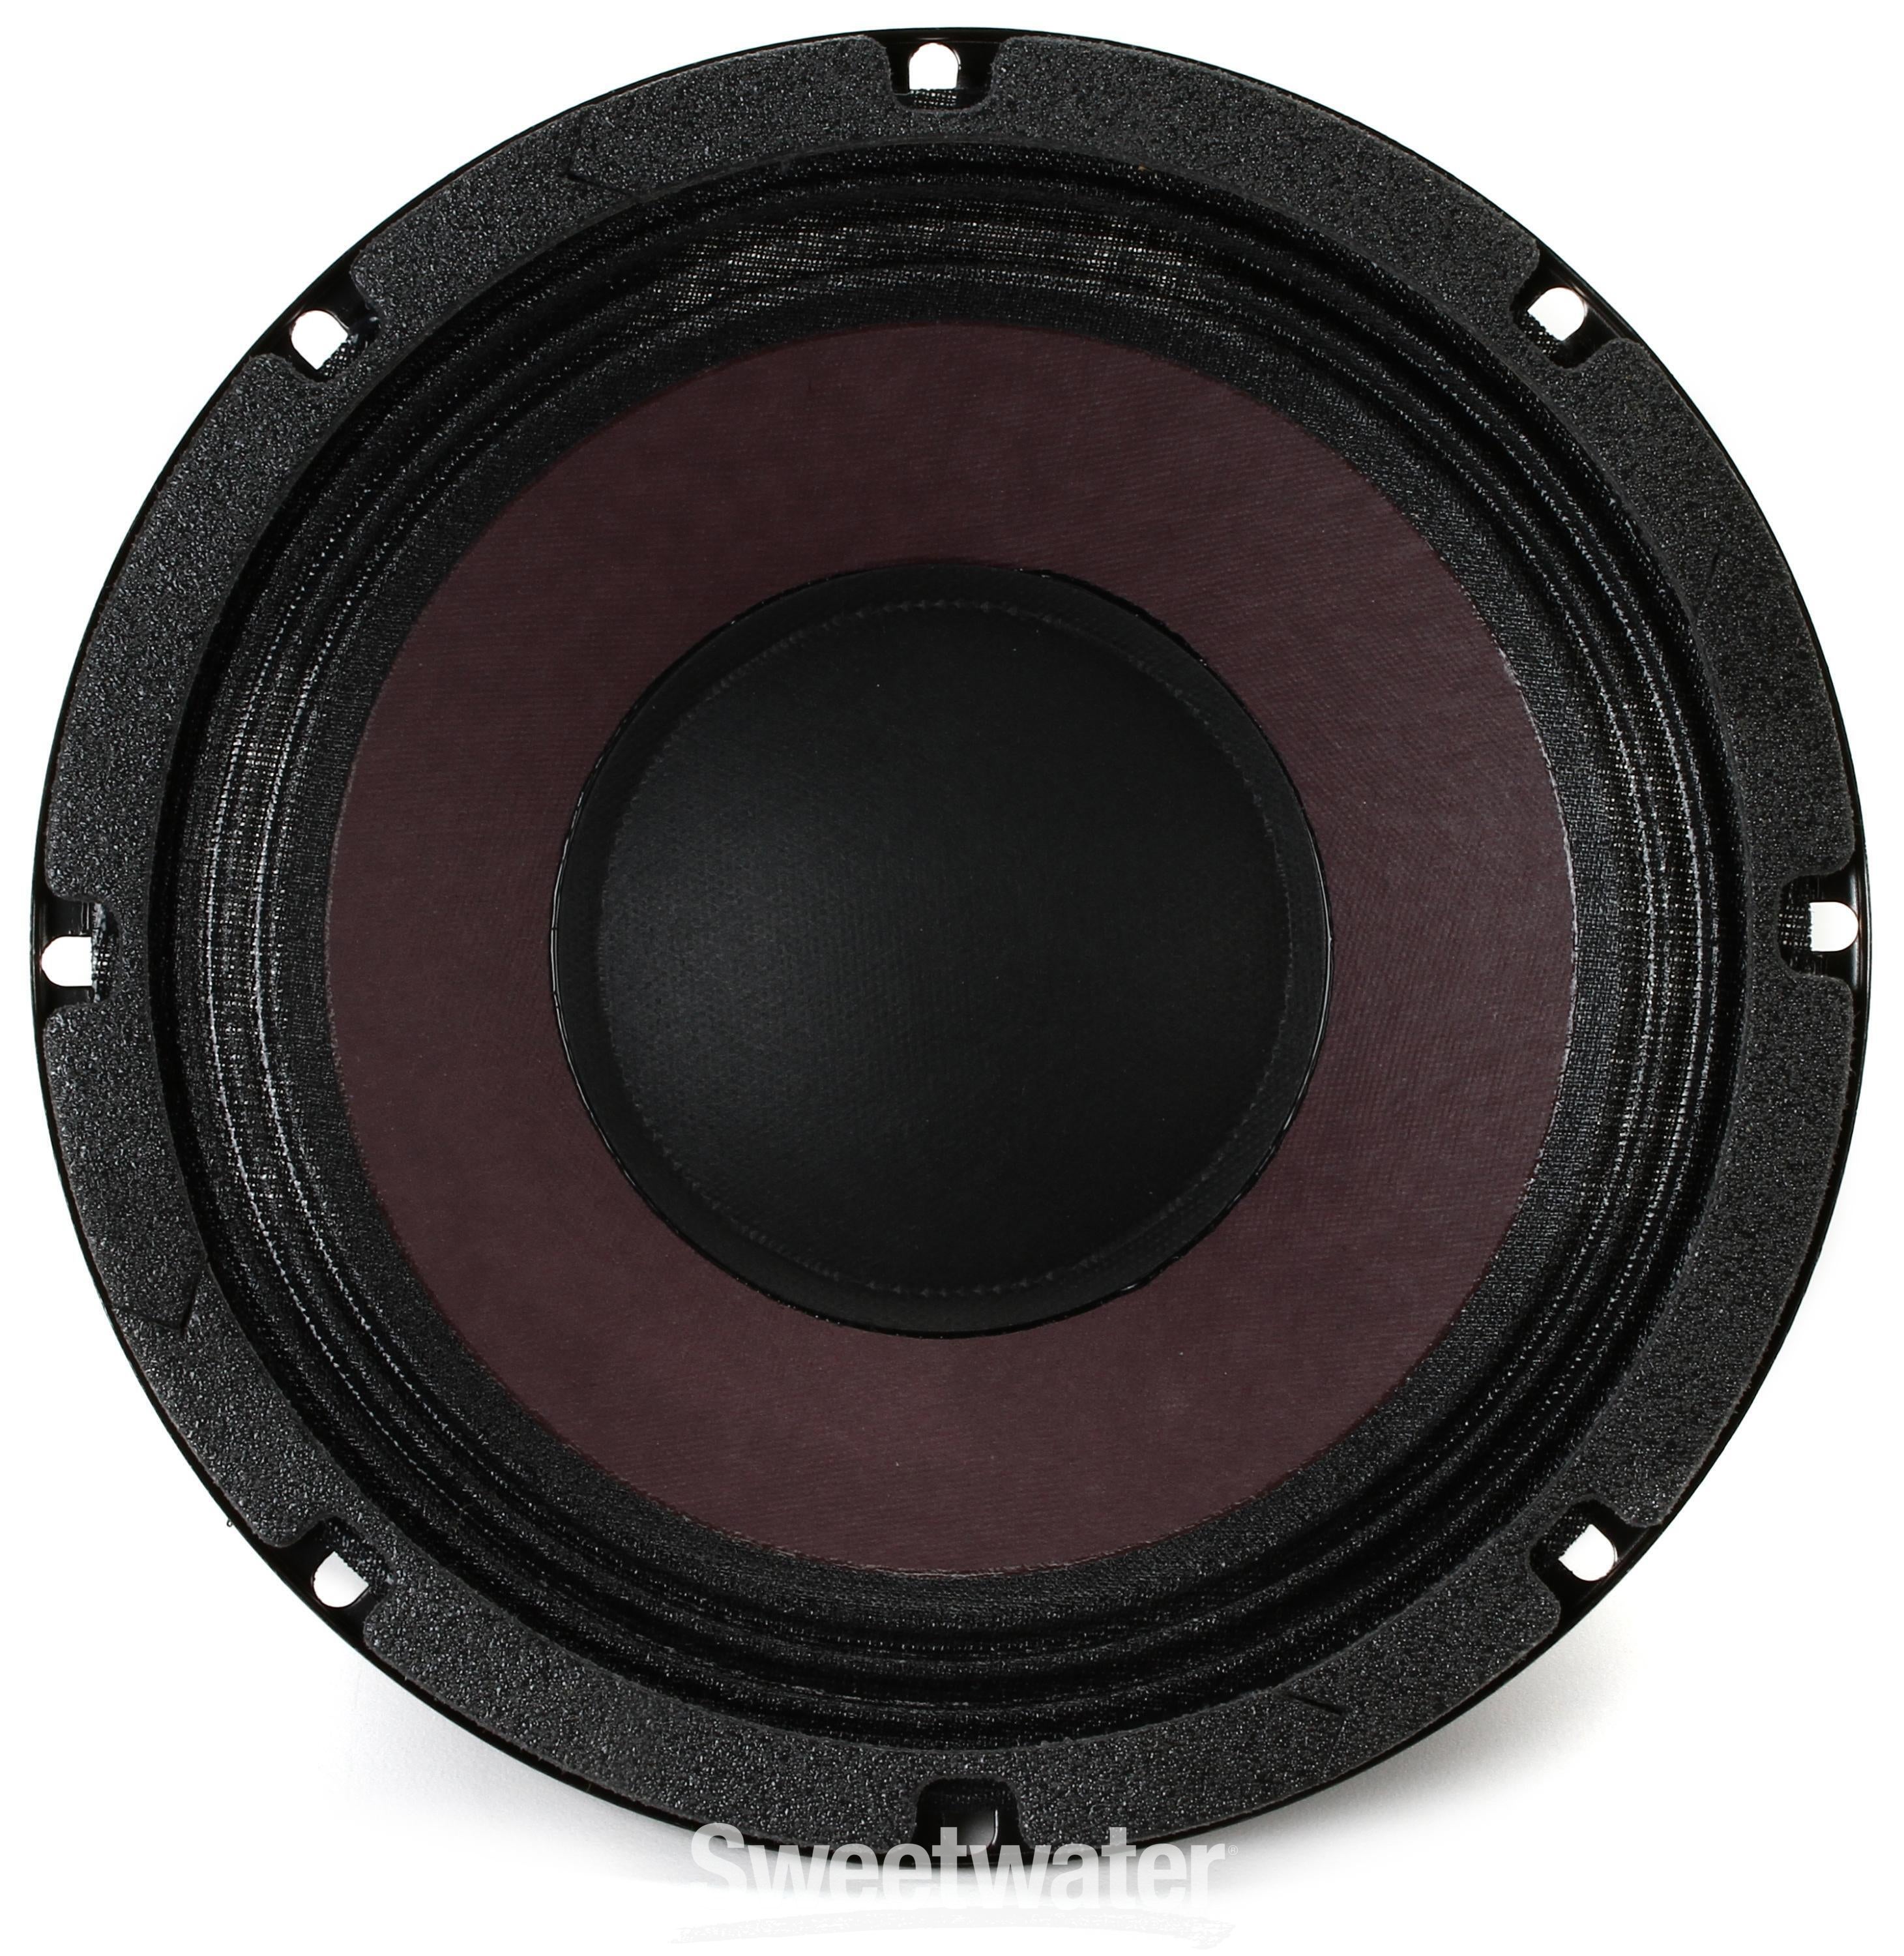 Eminence Alpha-8A American Standard Series 8-inch 125-watt Replacement  Speaker - 8 ohm